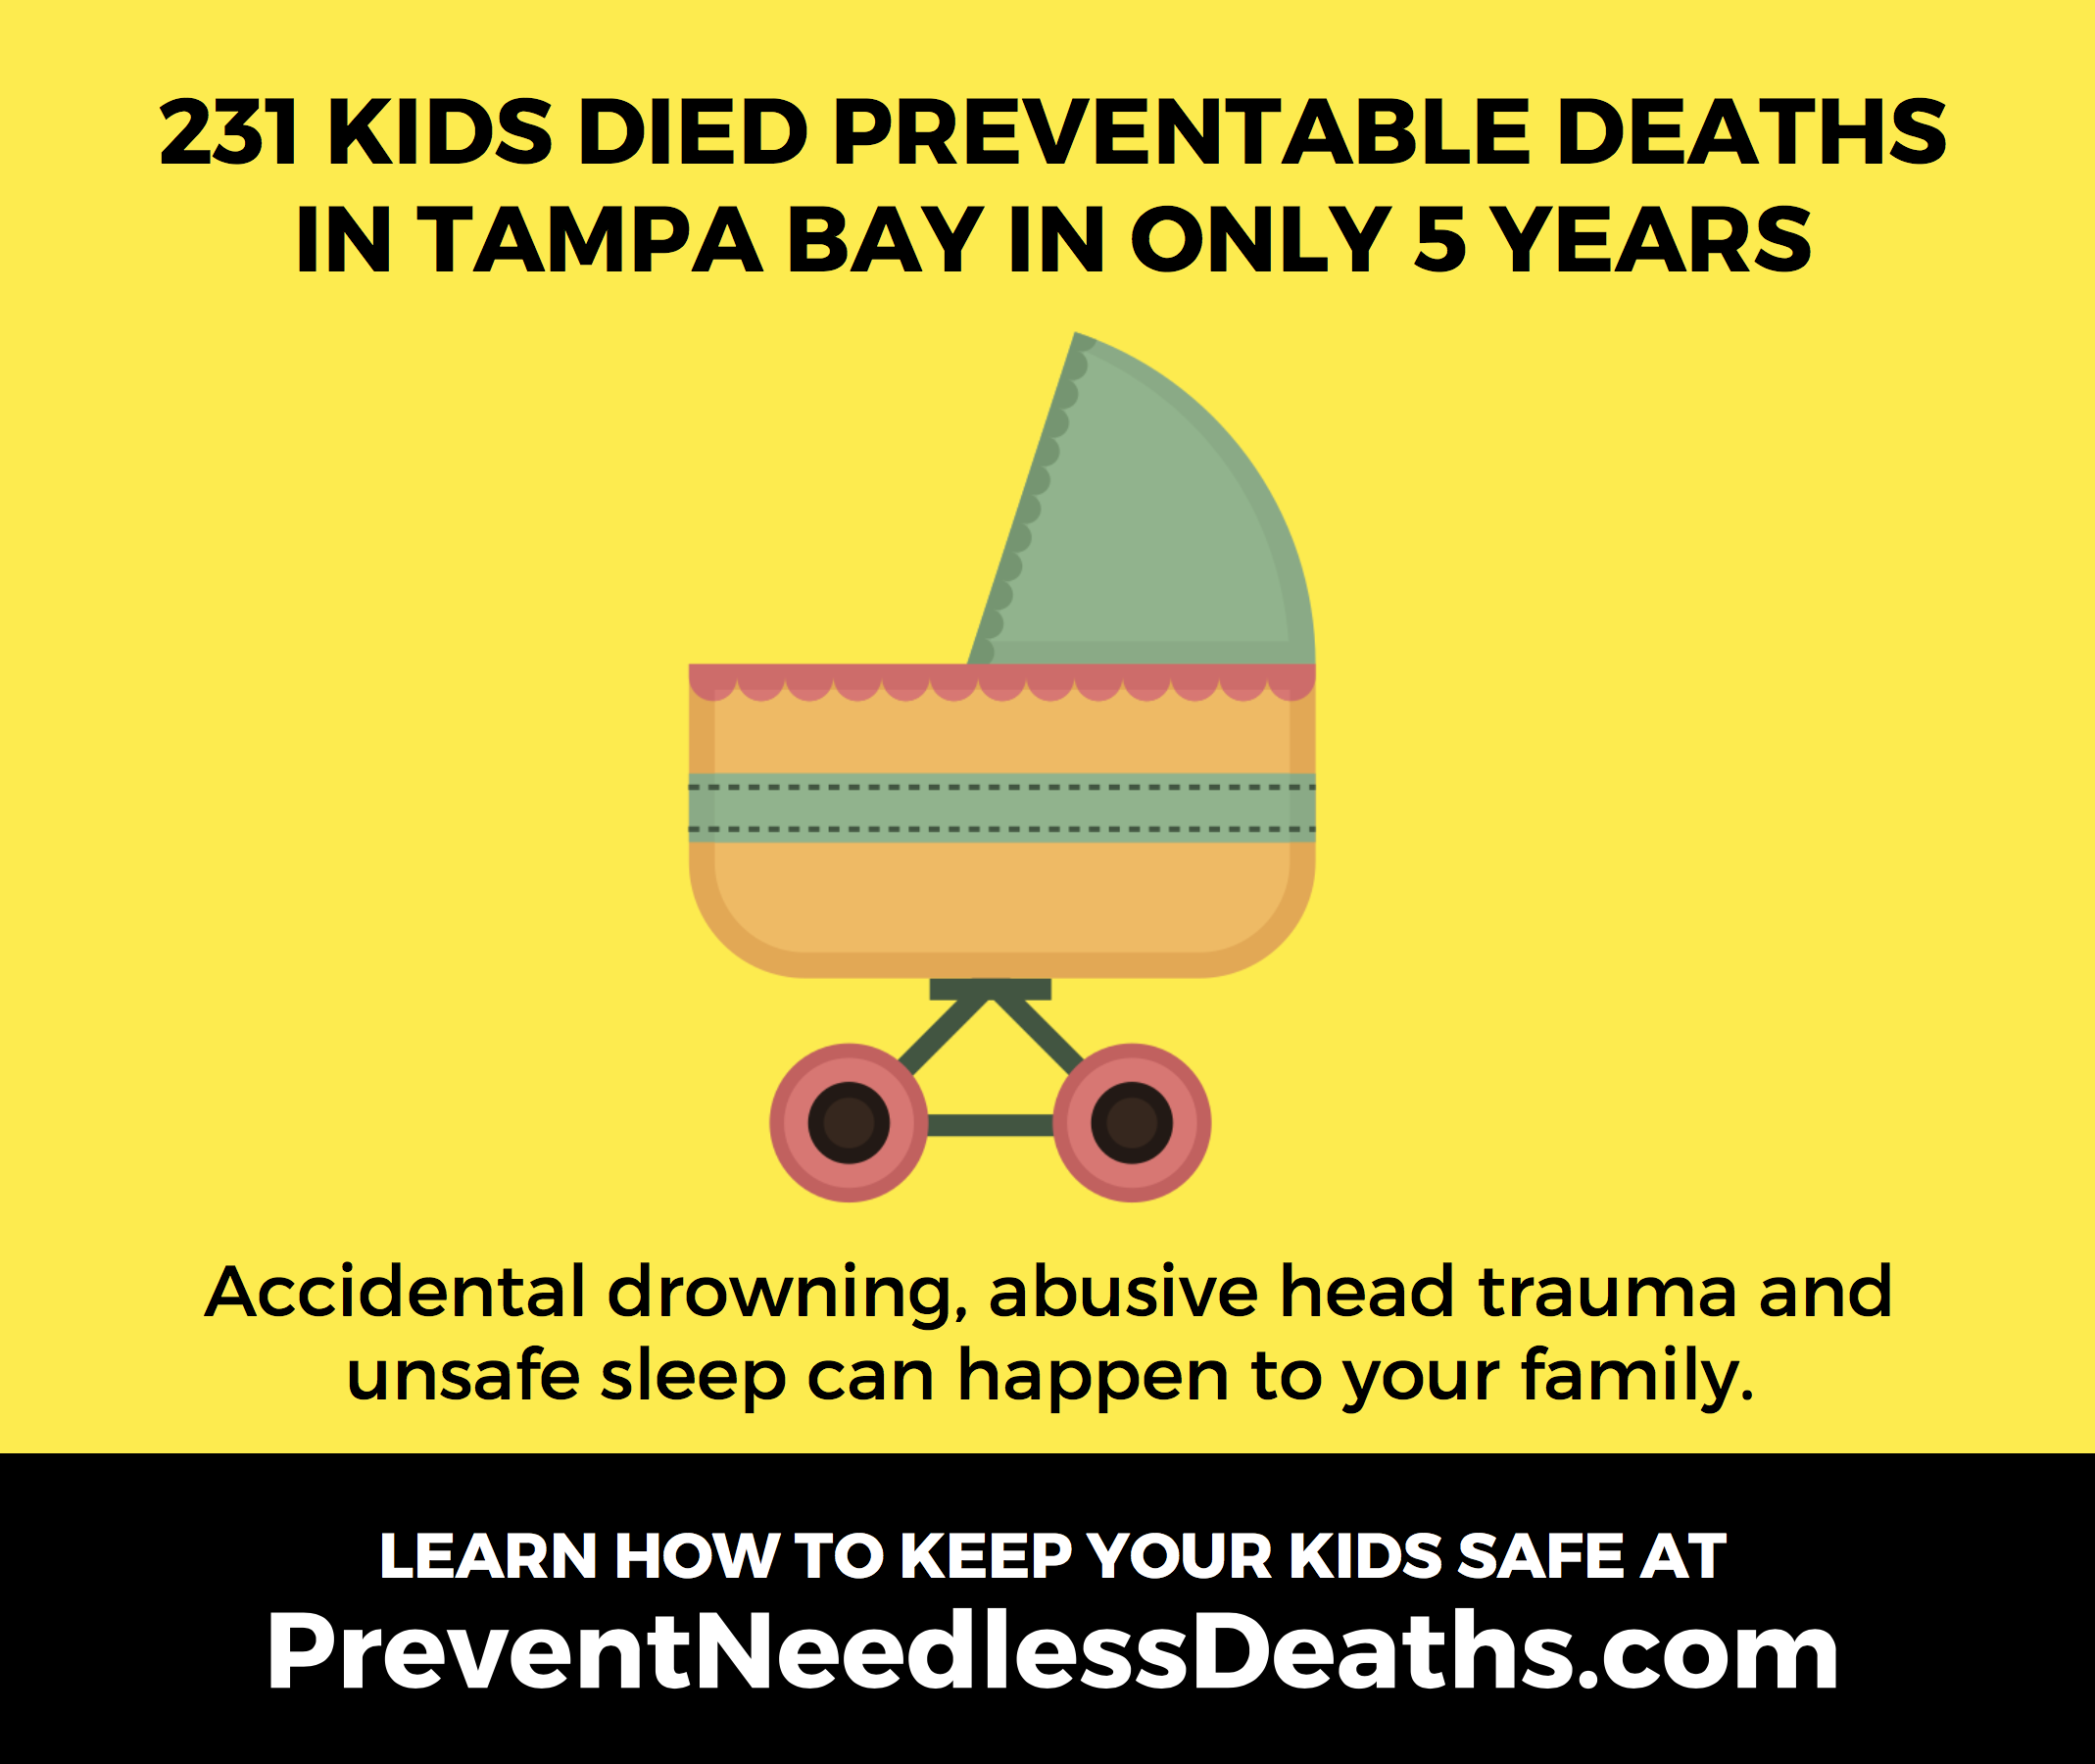 231 kids died preventable deaths